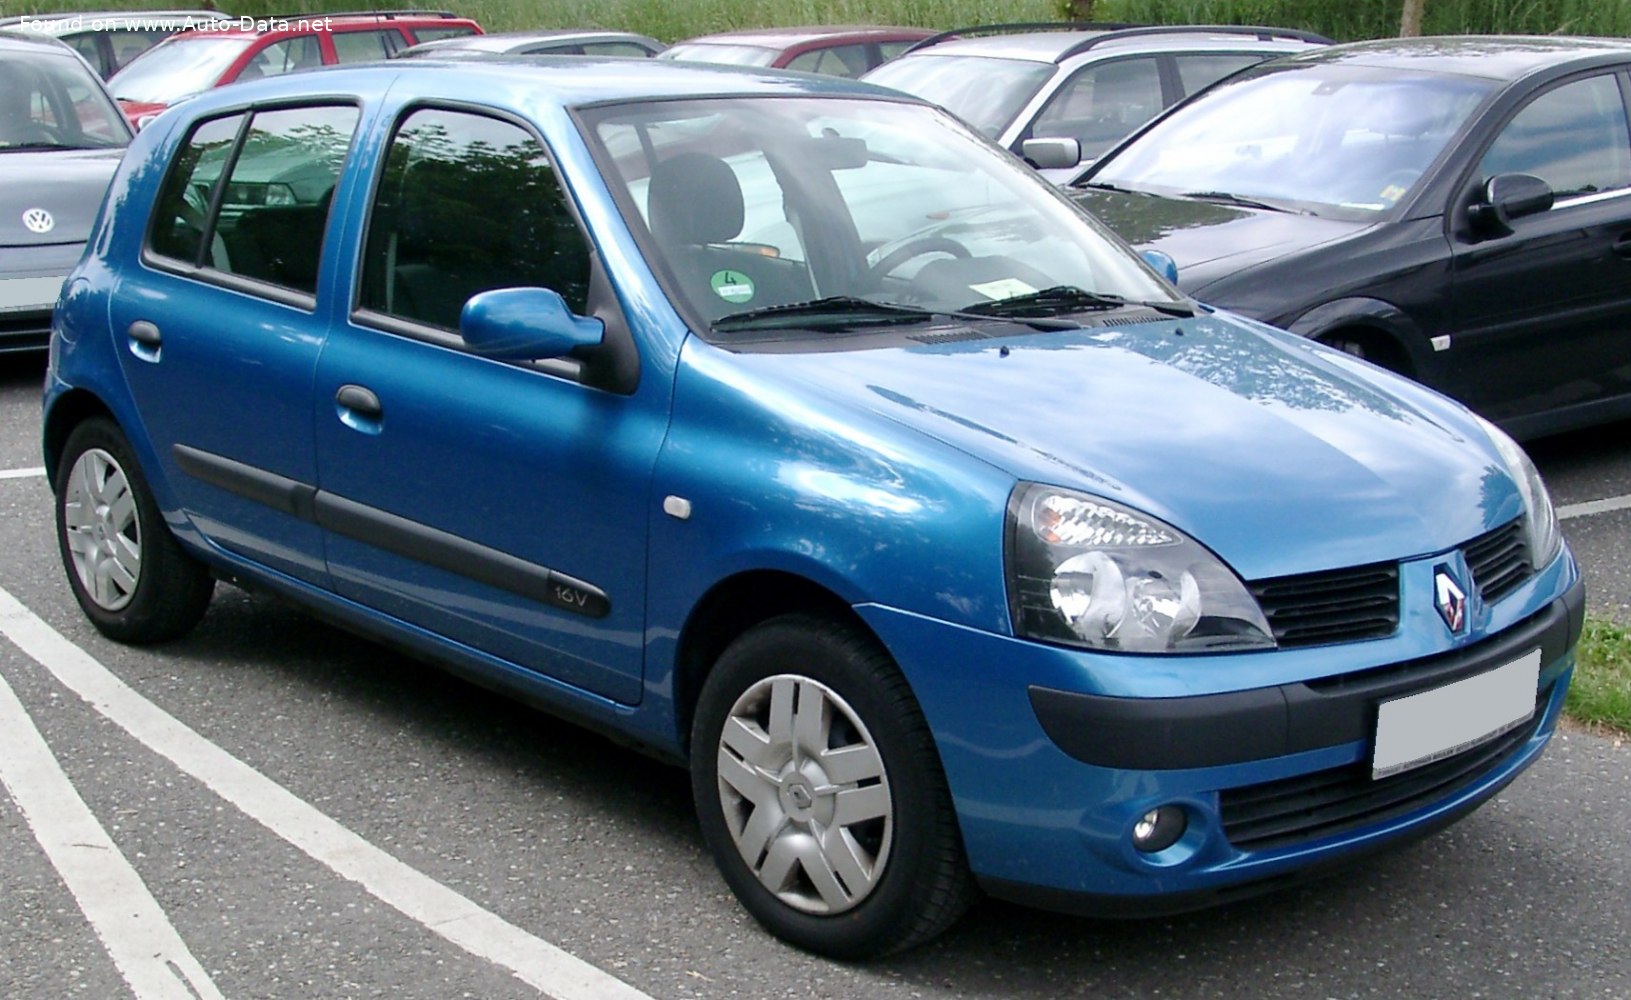 Renault Clio II 1.5 dCi (2003) - POV Drive 